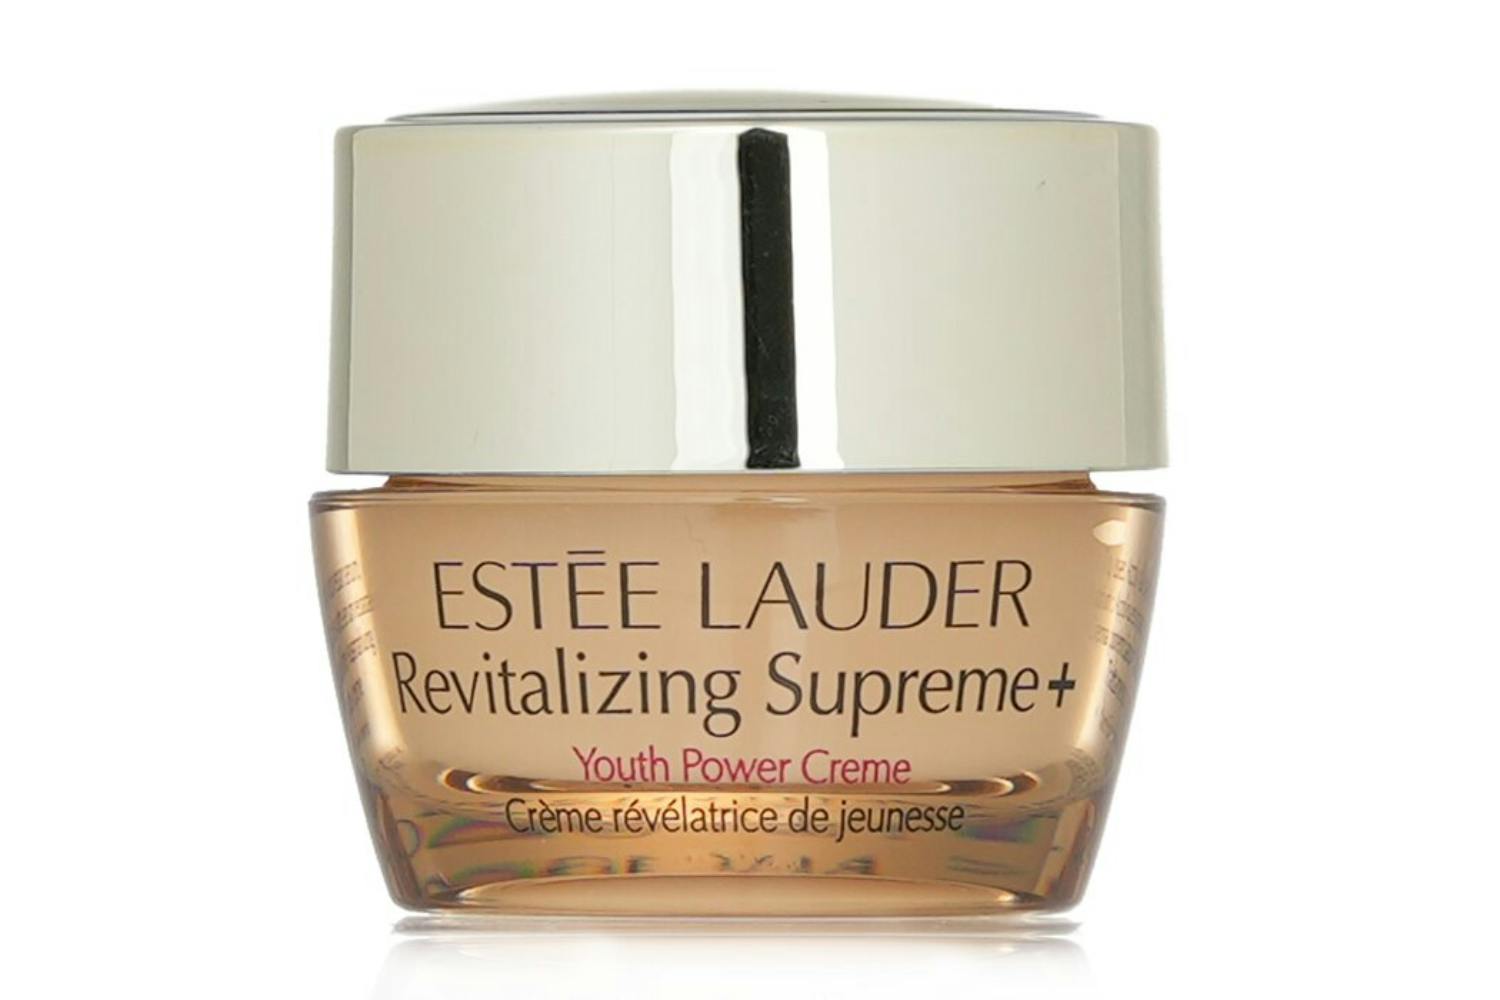 Estee Lauder 285458 Revitalizing Supreme + Youth Power Creme | 7ml